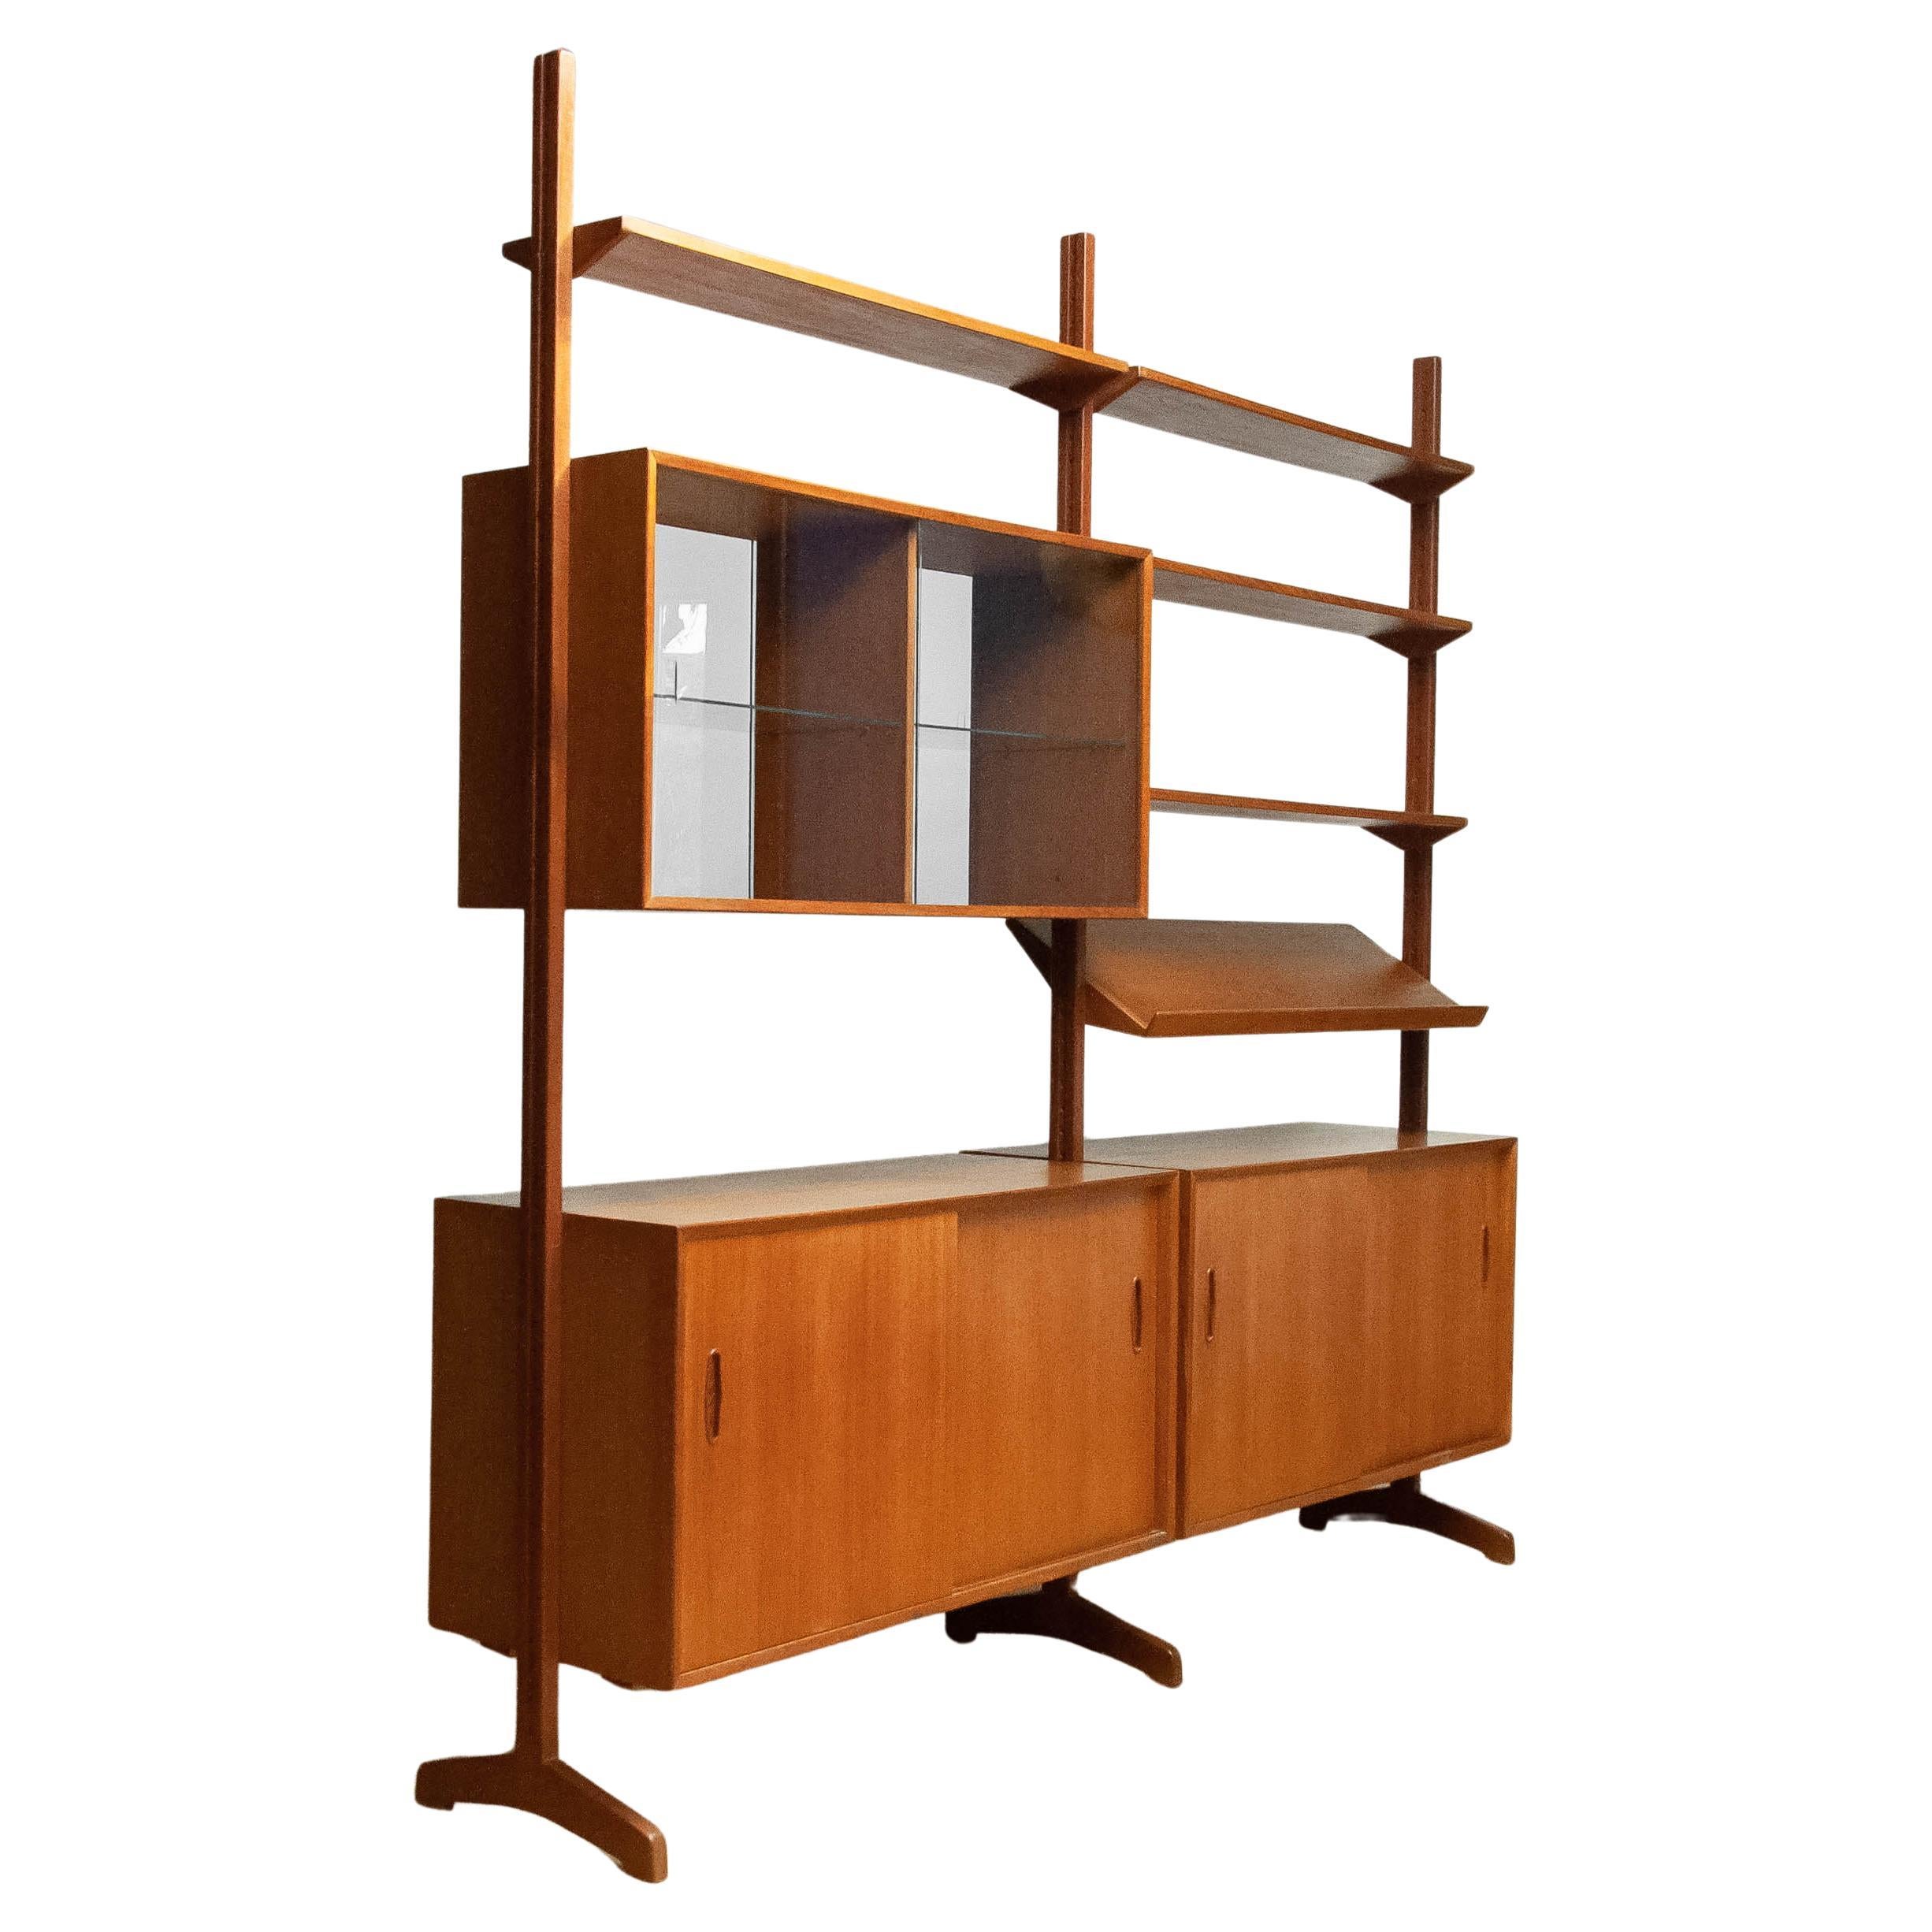 1950s Teak Bookcase Shelf Cabinet / Room divider By Nils Jonsson For Troeds. For Sale